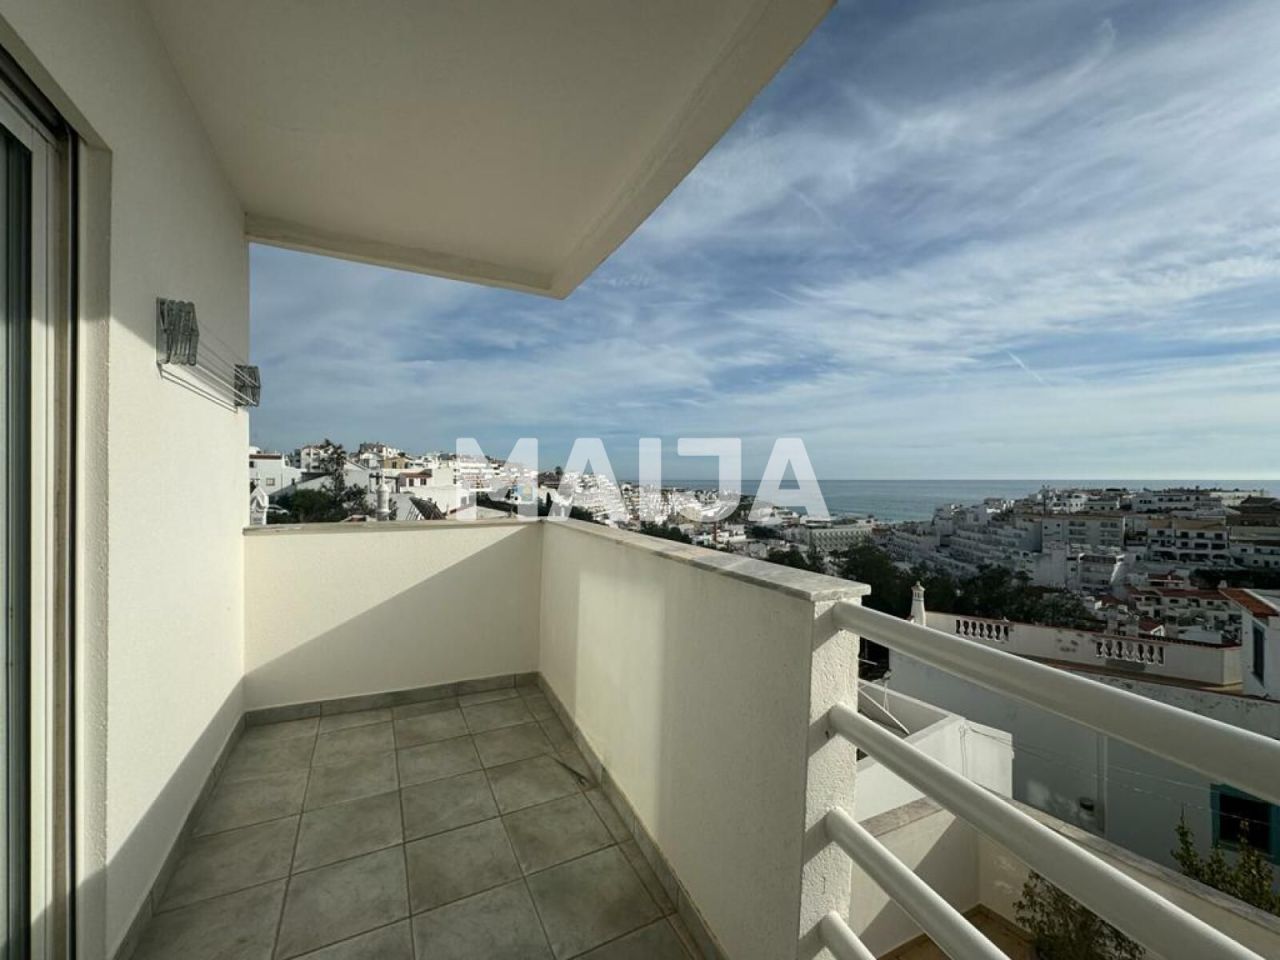 Апартаменты в Албуфейре, Португалия, 88.5 м² - фото 1